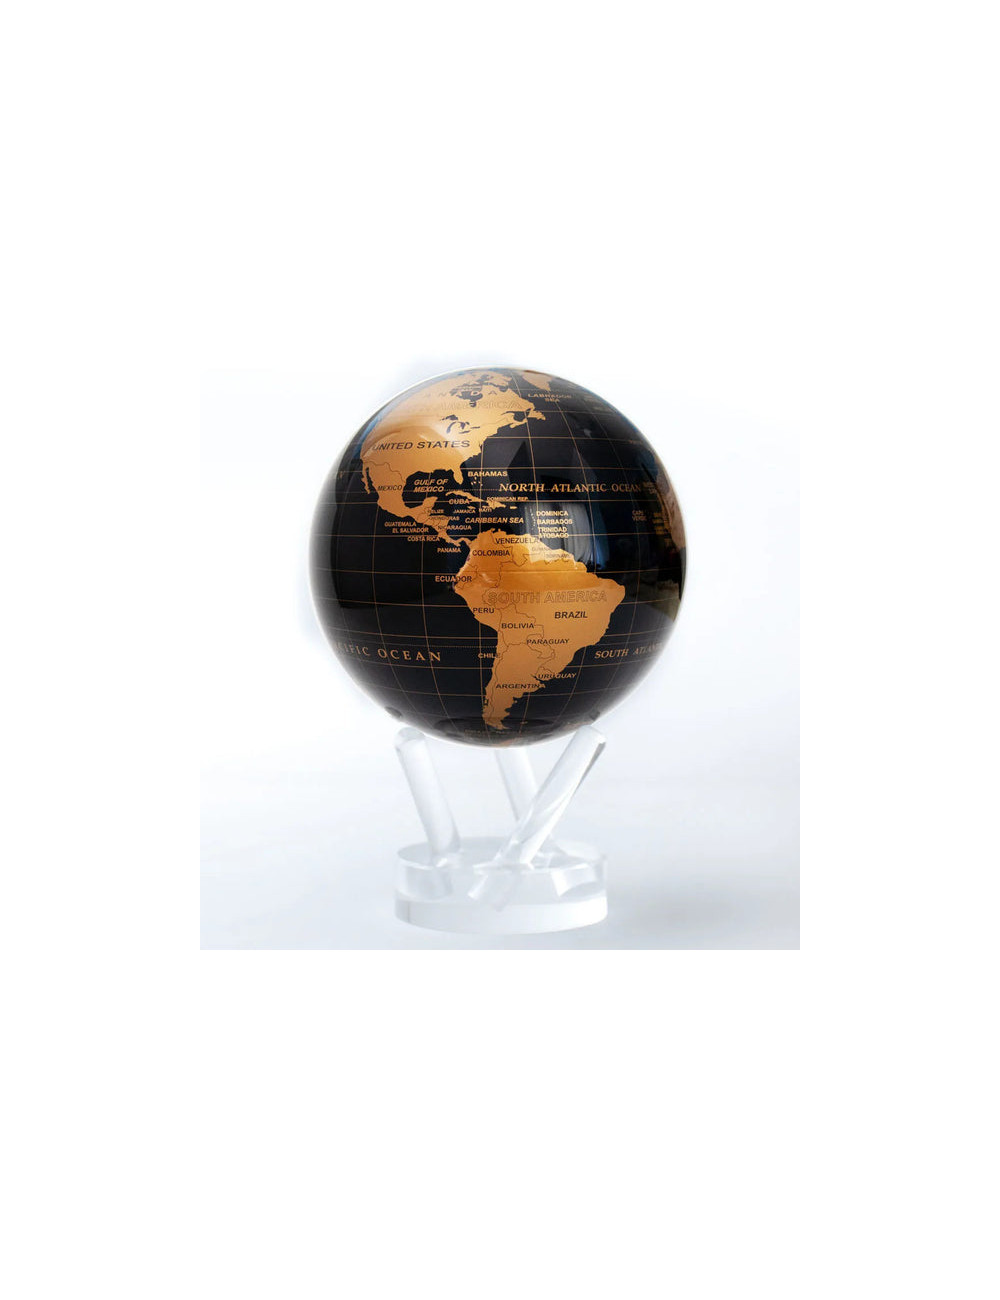 Globes: Globe autorotatif Mova 114mm (4,5'') Terre vue satellite